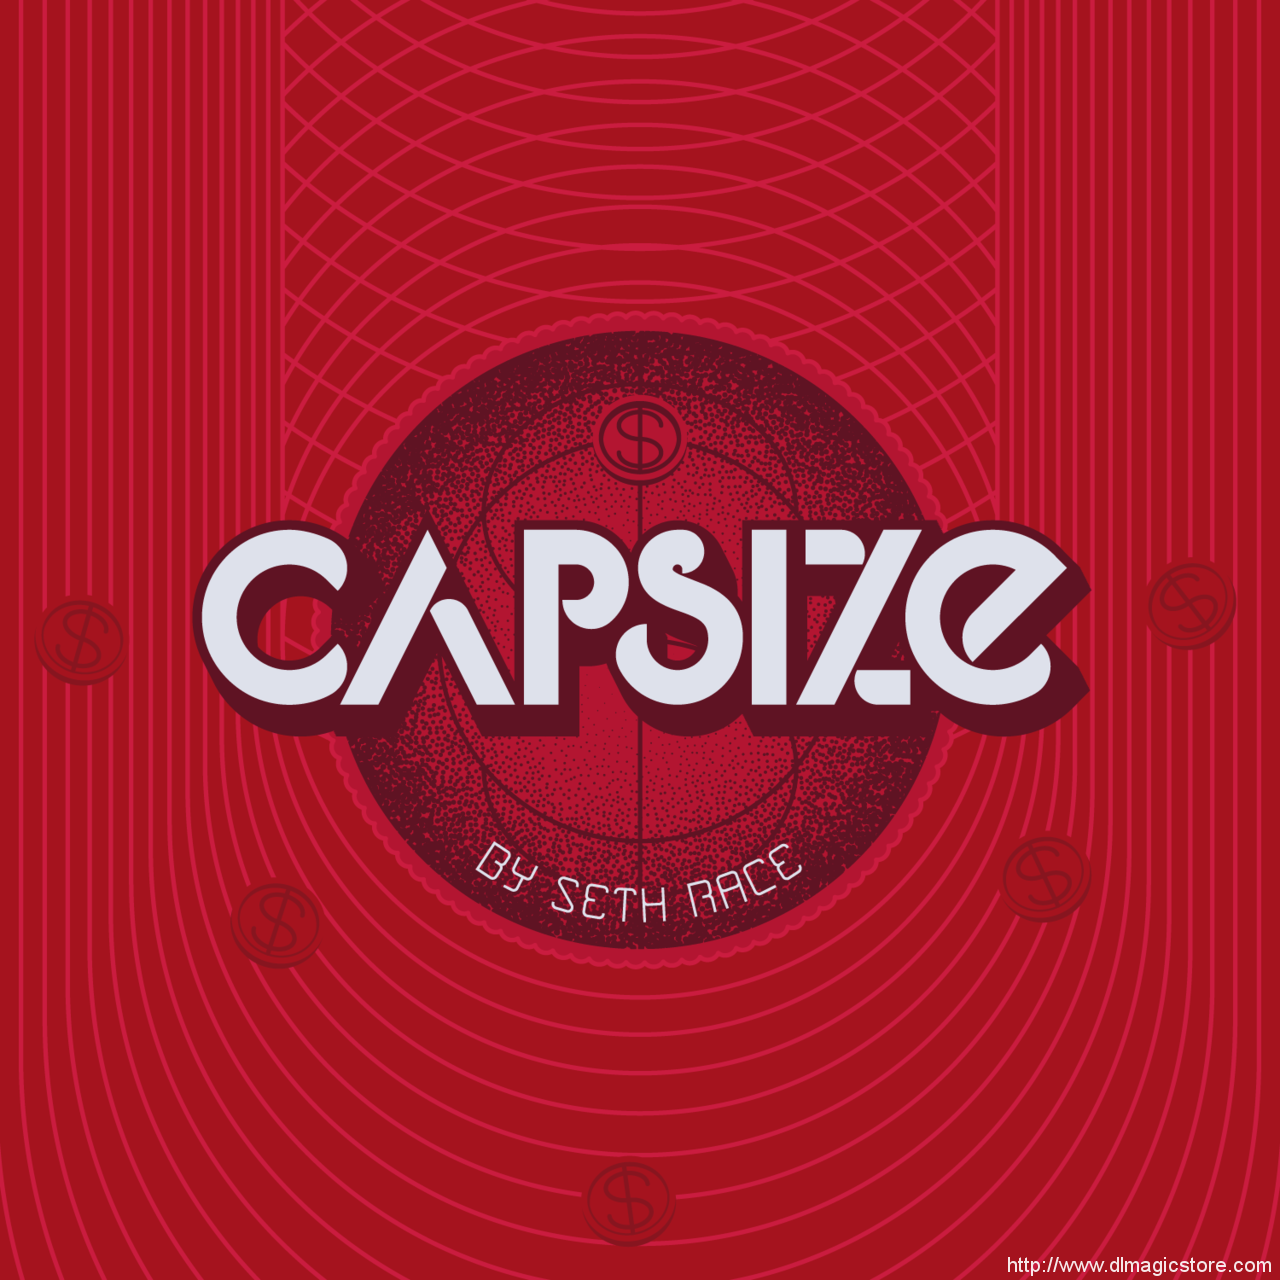 Seth Race - Capsize